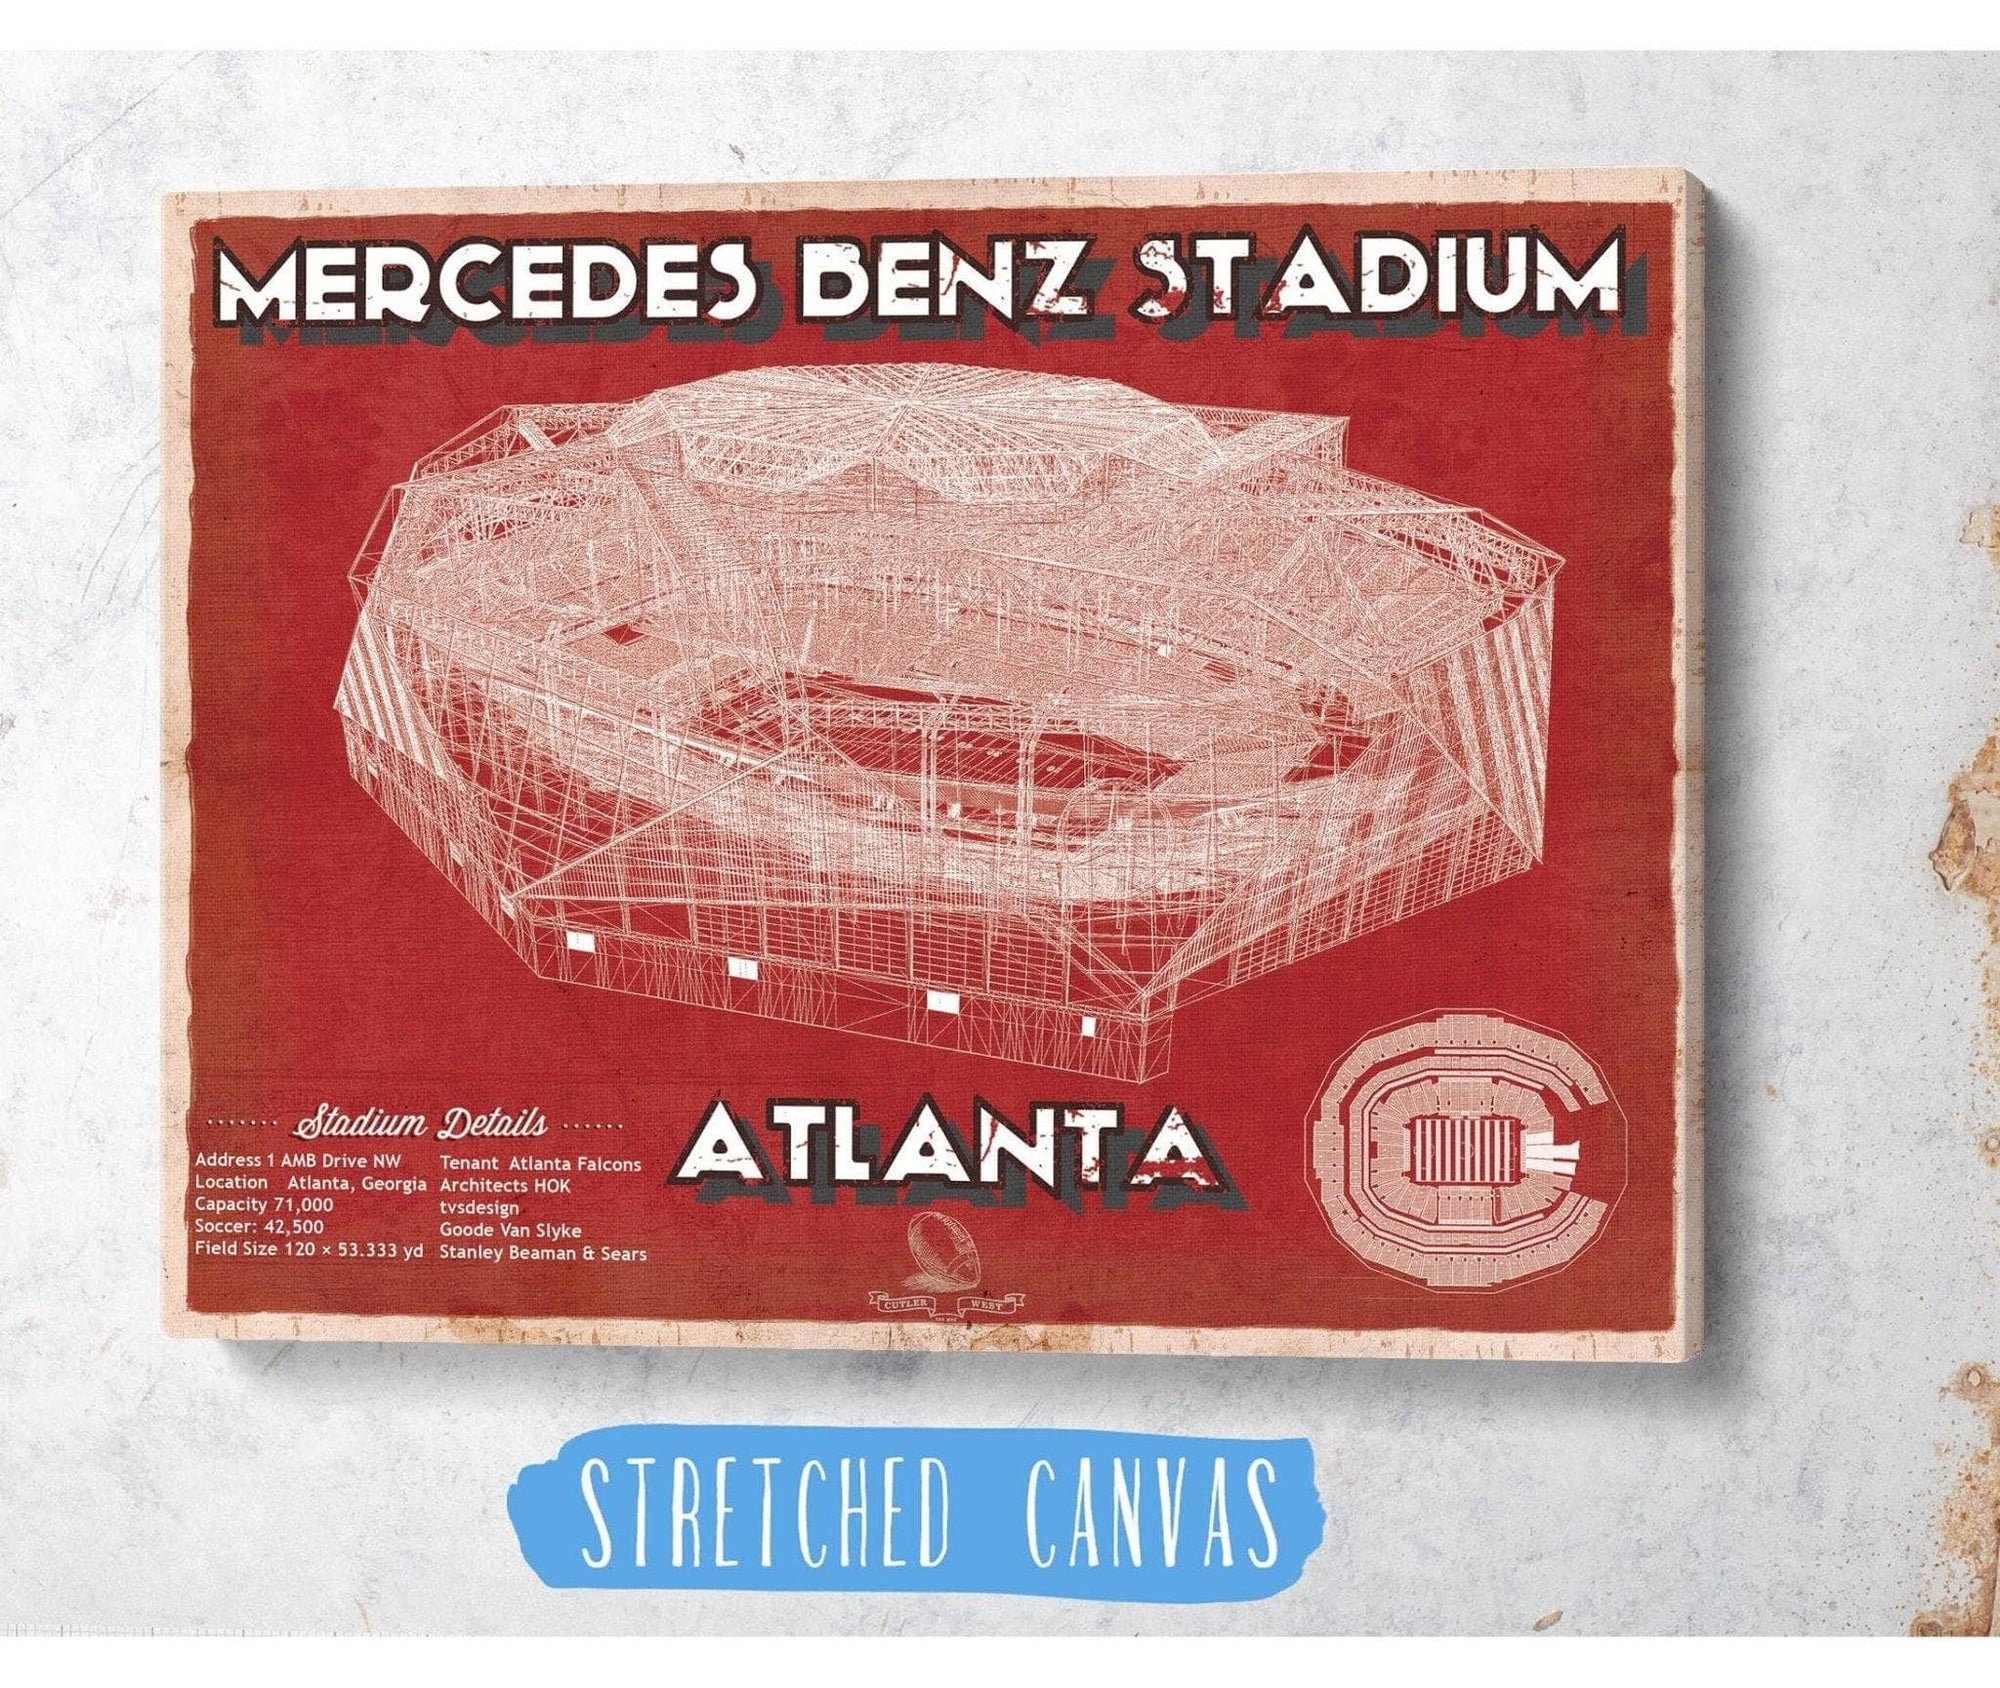 Cutler West Pro Football Collection Atlanta Falcons - Mercedes-Benz Stadium NFL Team Print